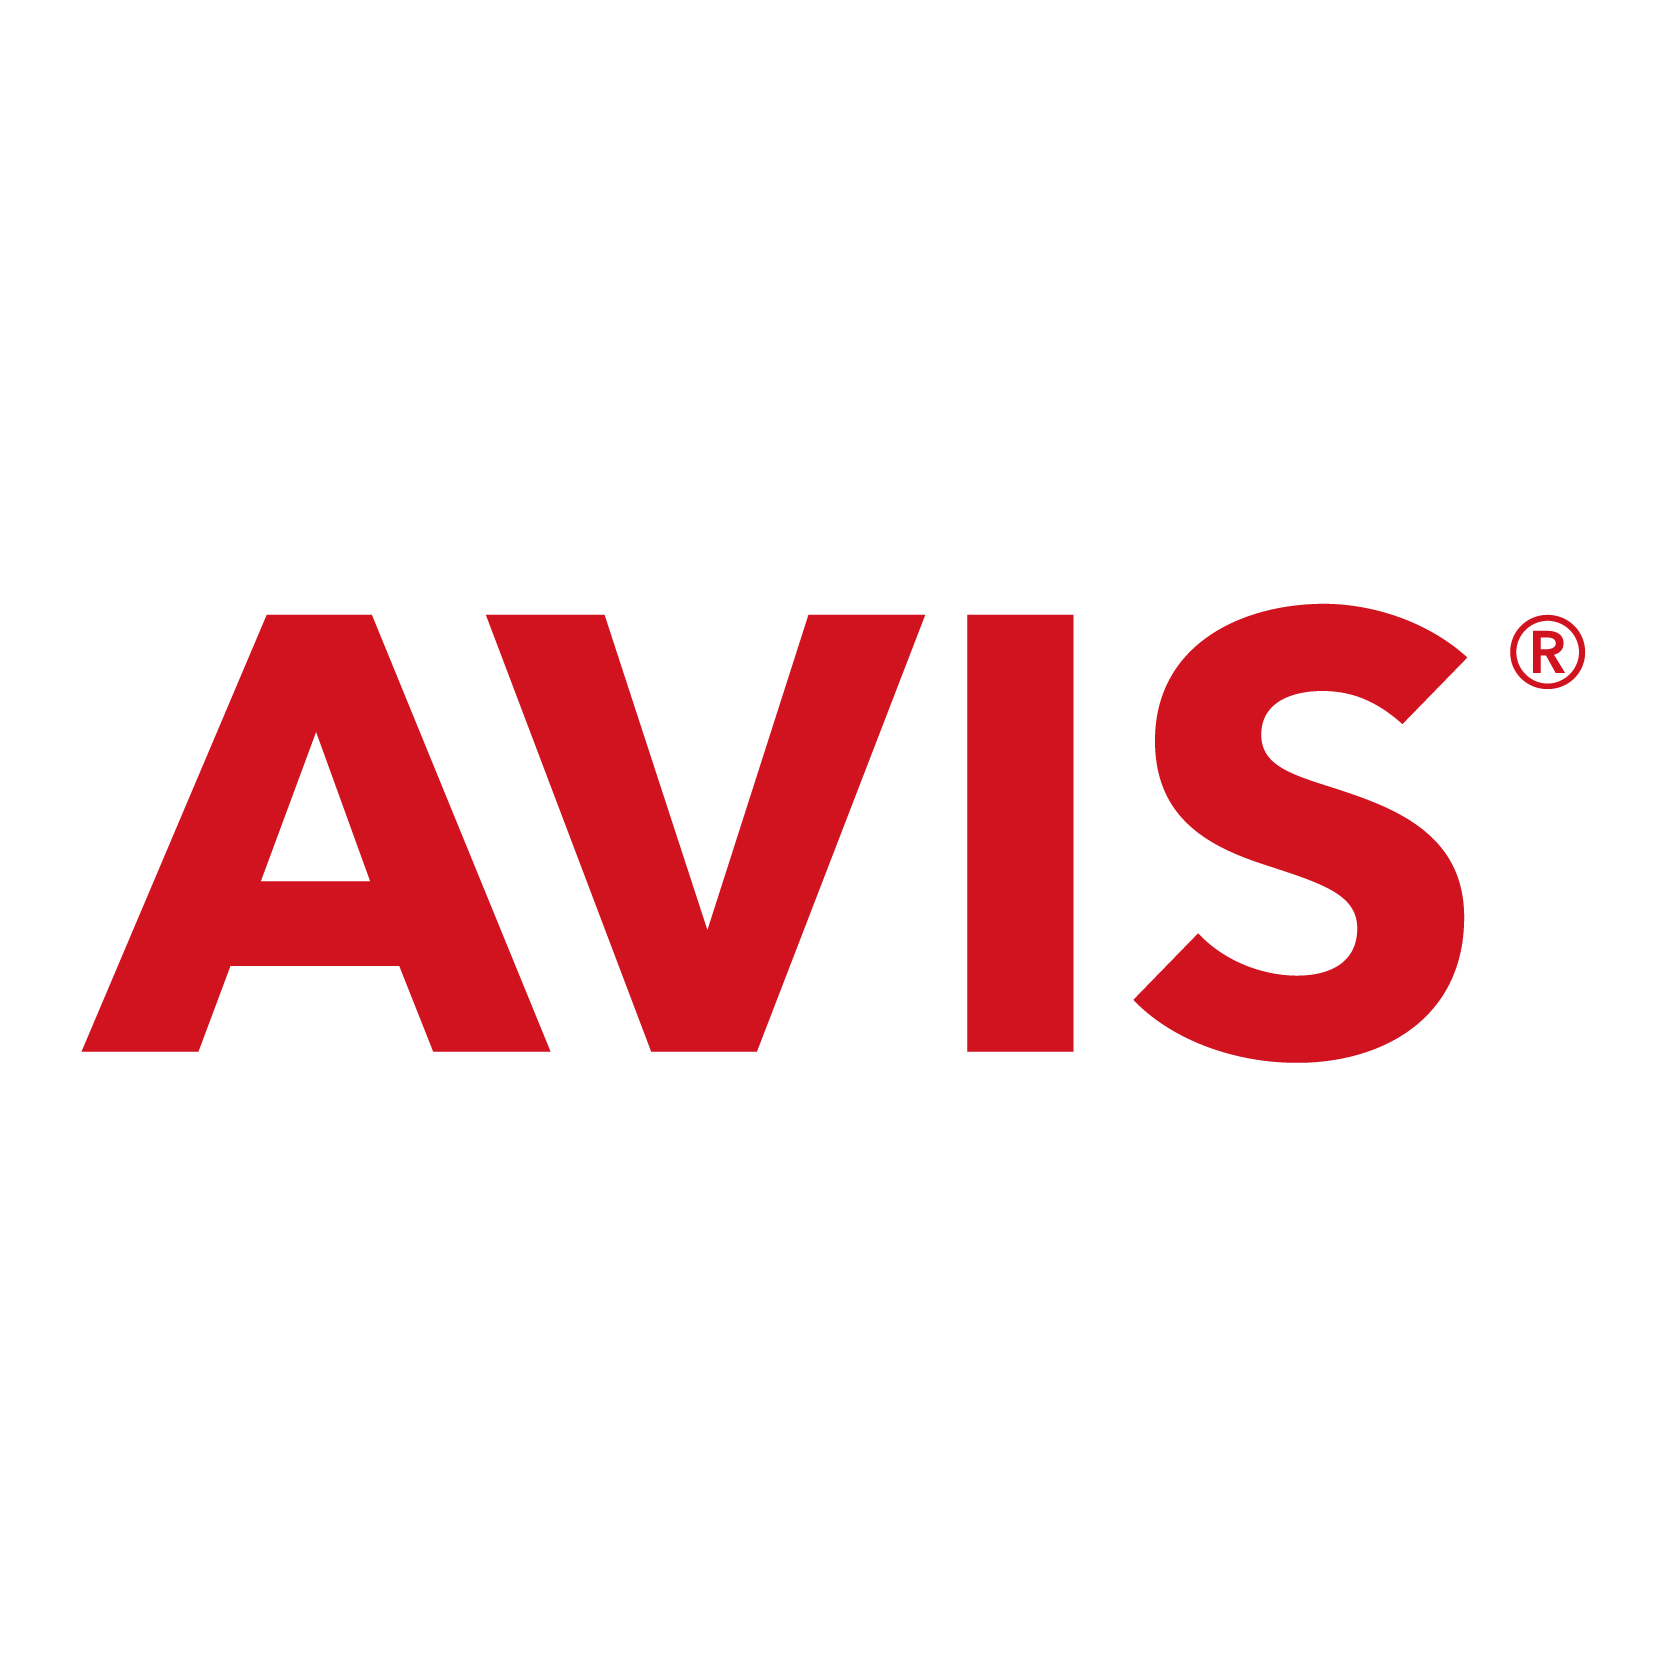 Avis Company Profile